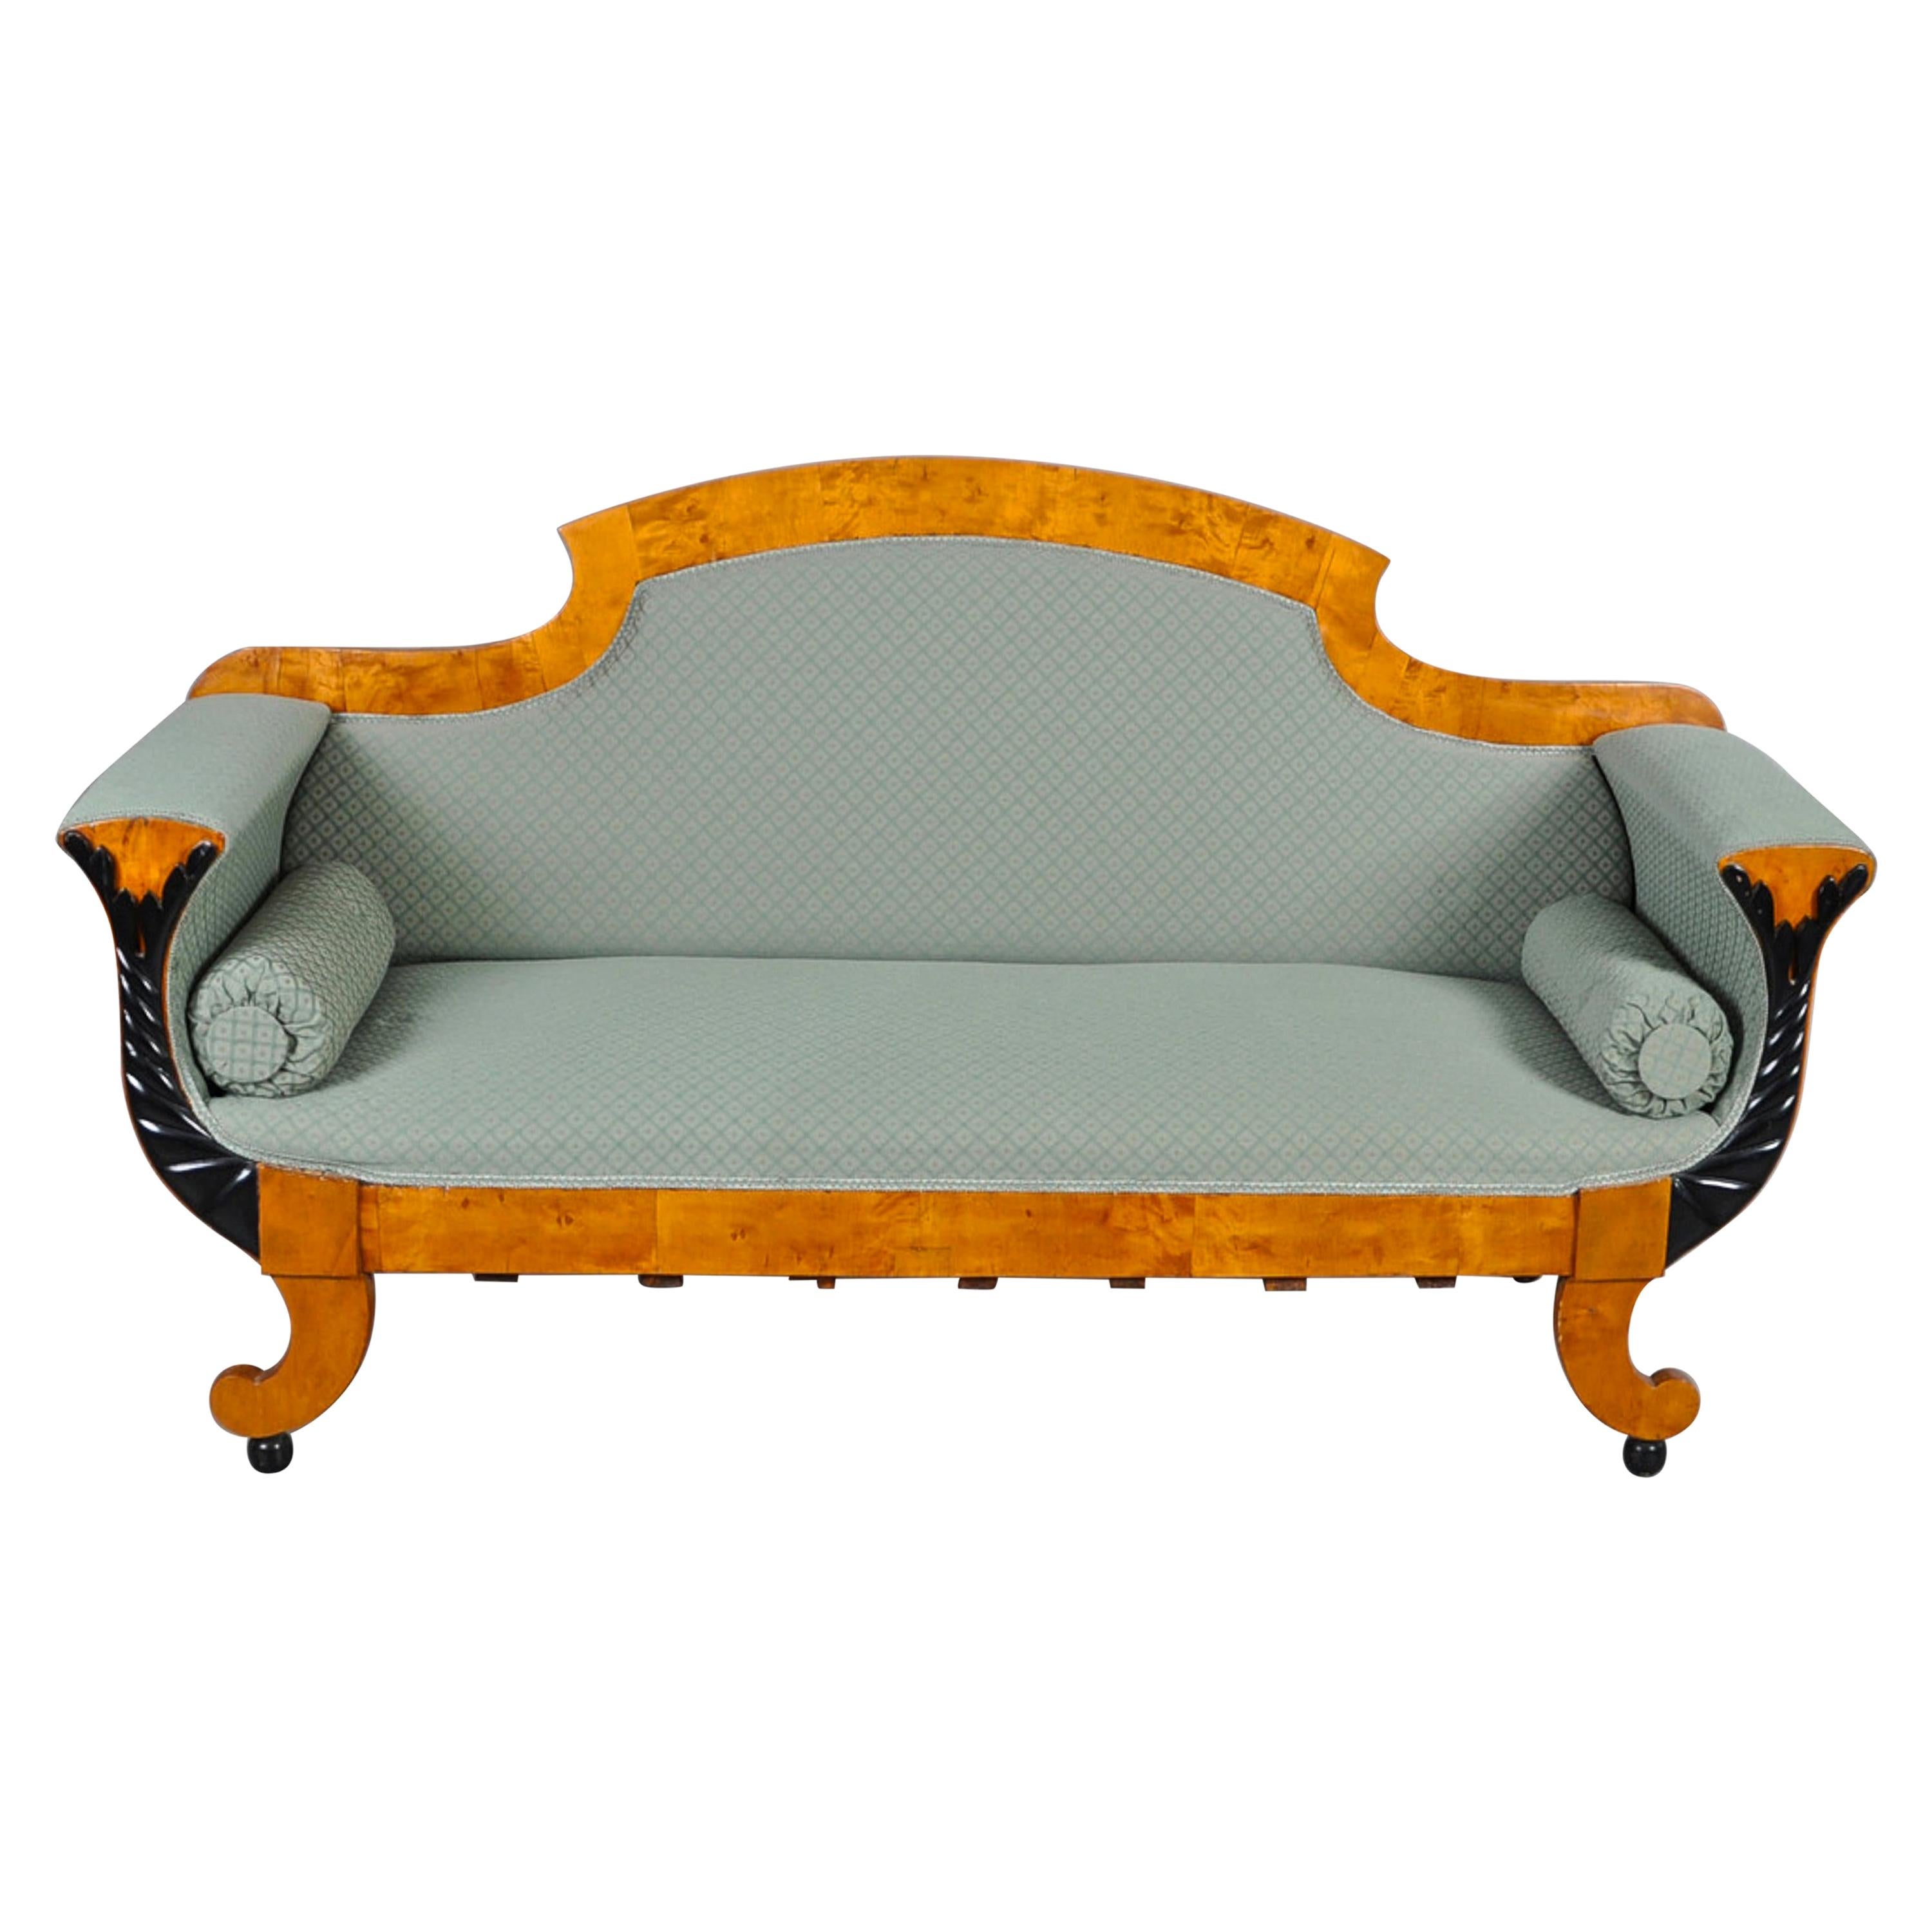 Swedish Biedermeier Sofa Empire Couch Honey Color, 2-3 Seat, 19th Century Ormolu